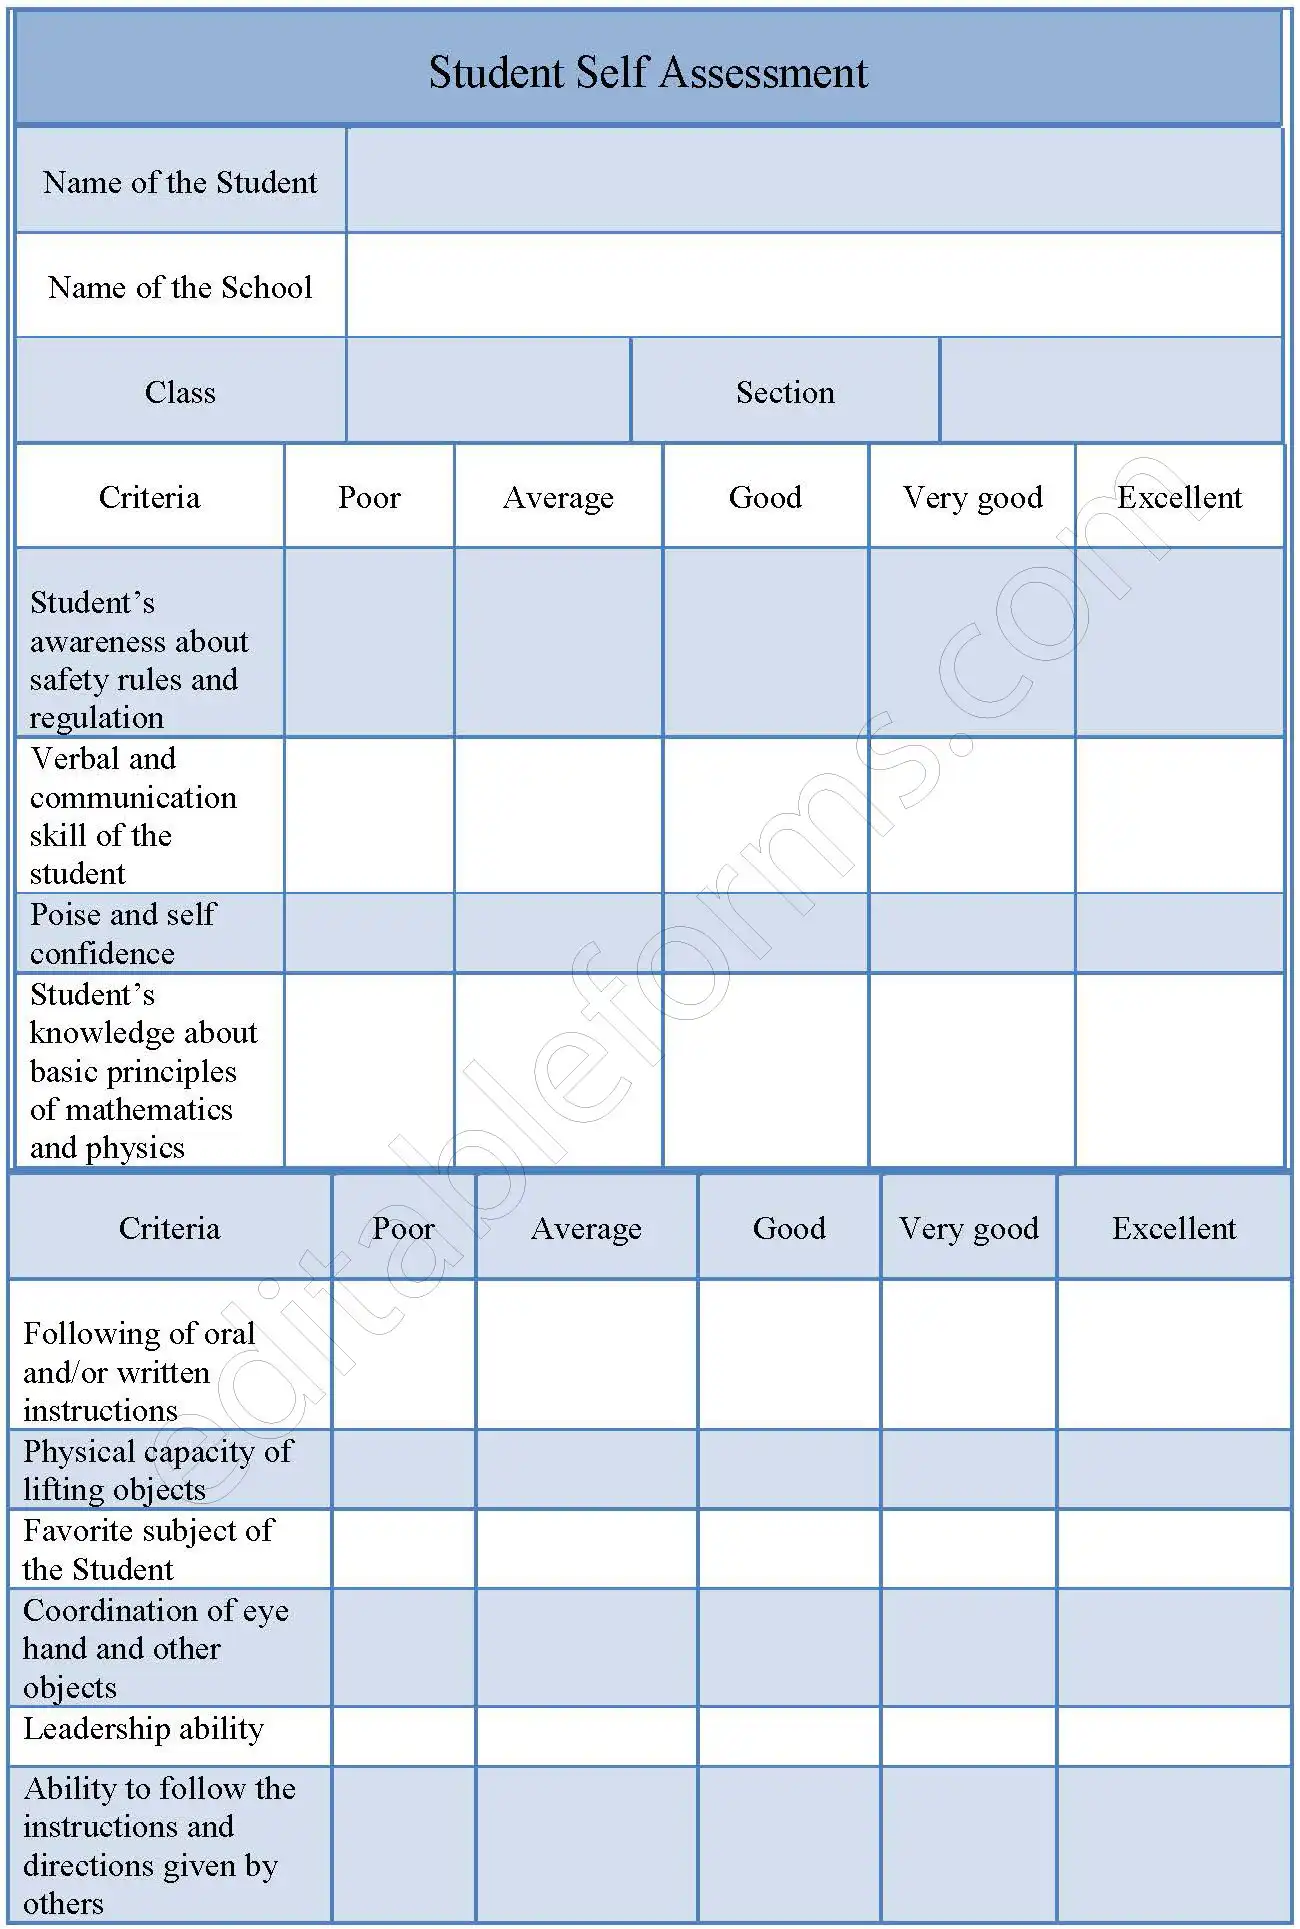 Student Self-Assessment Fillable PDF Form